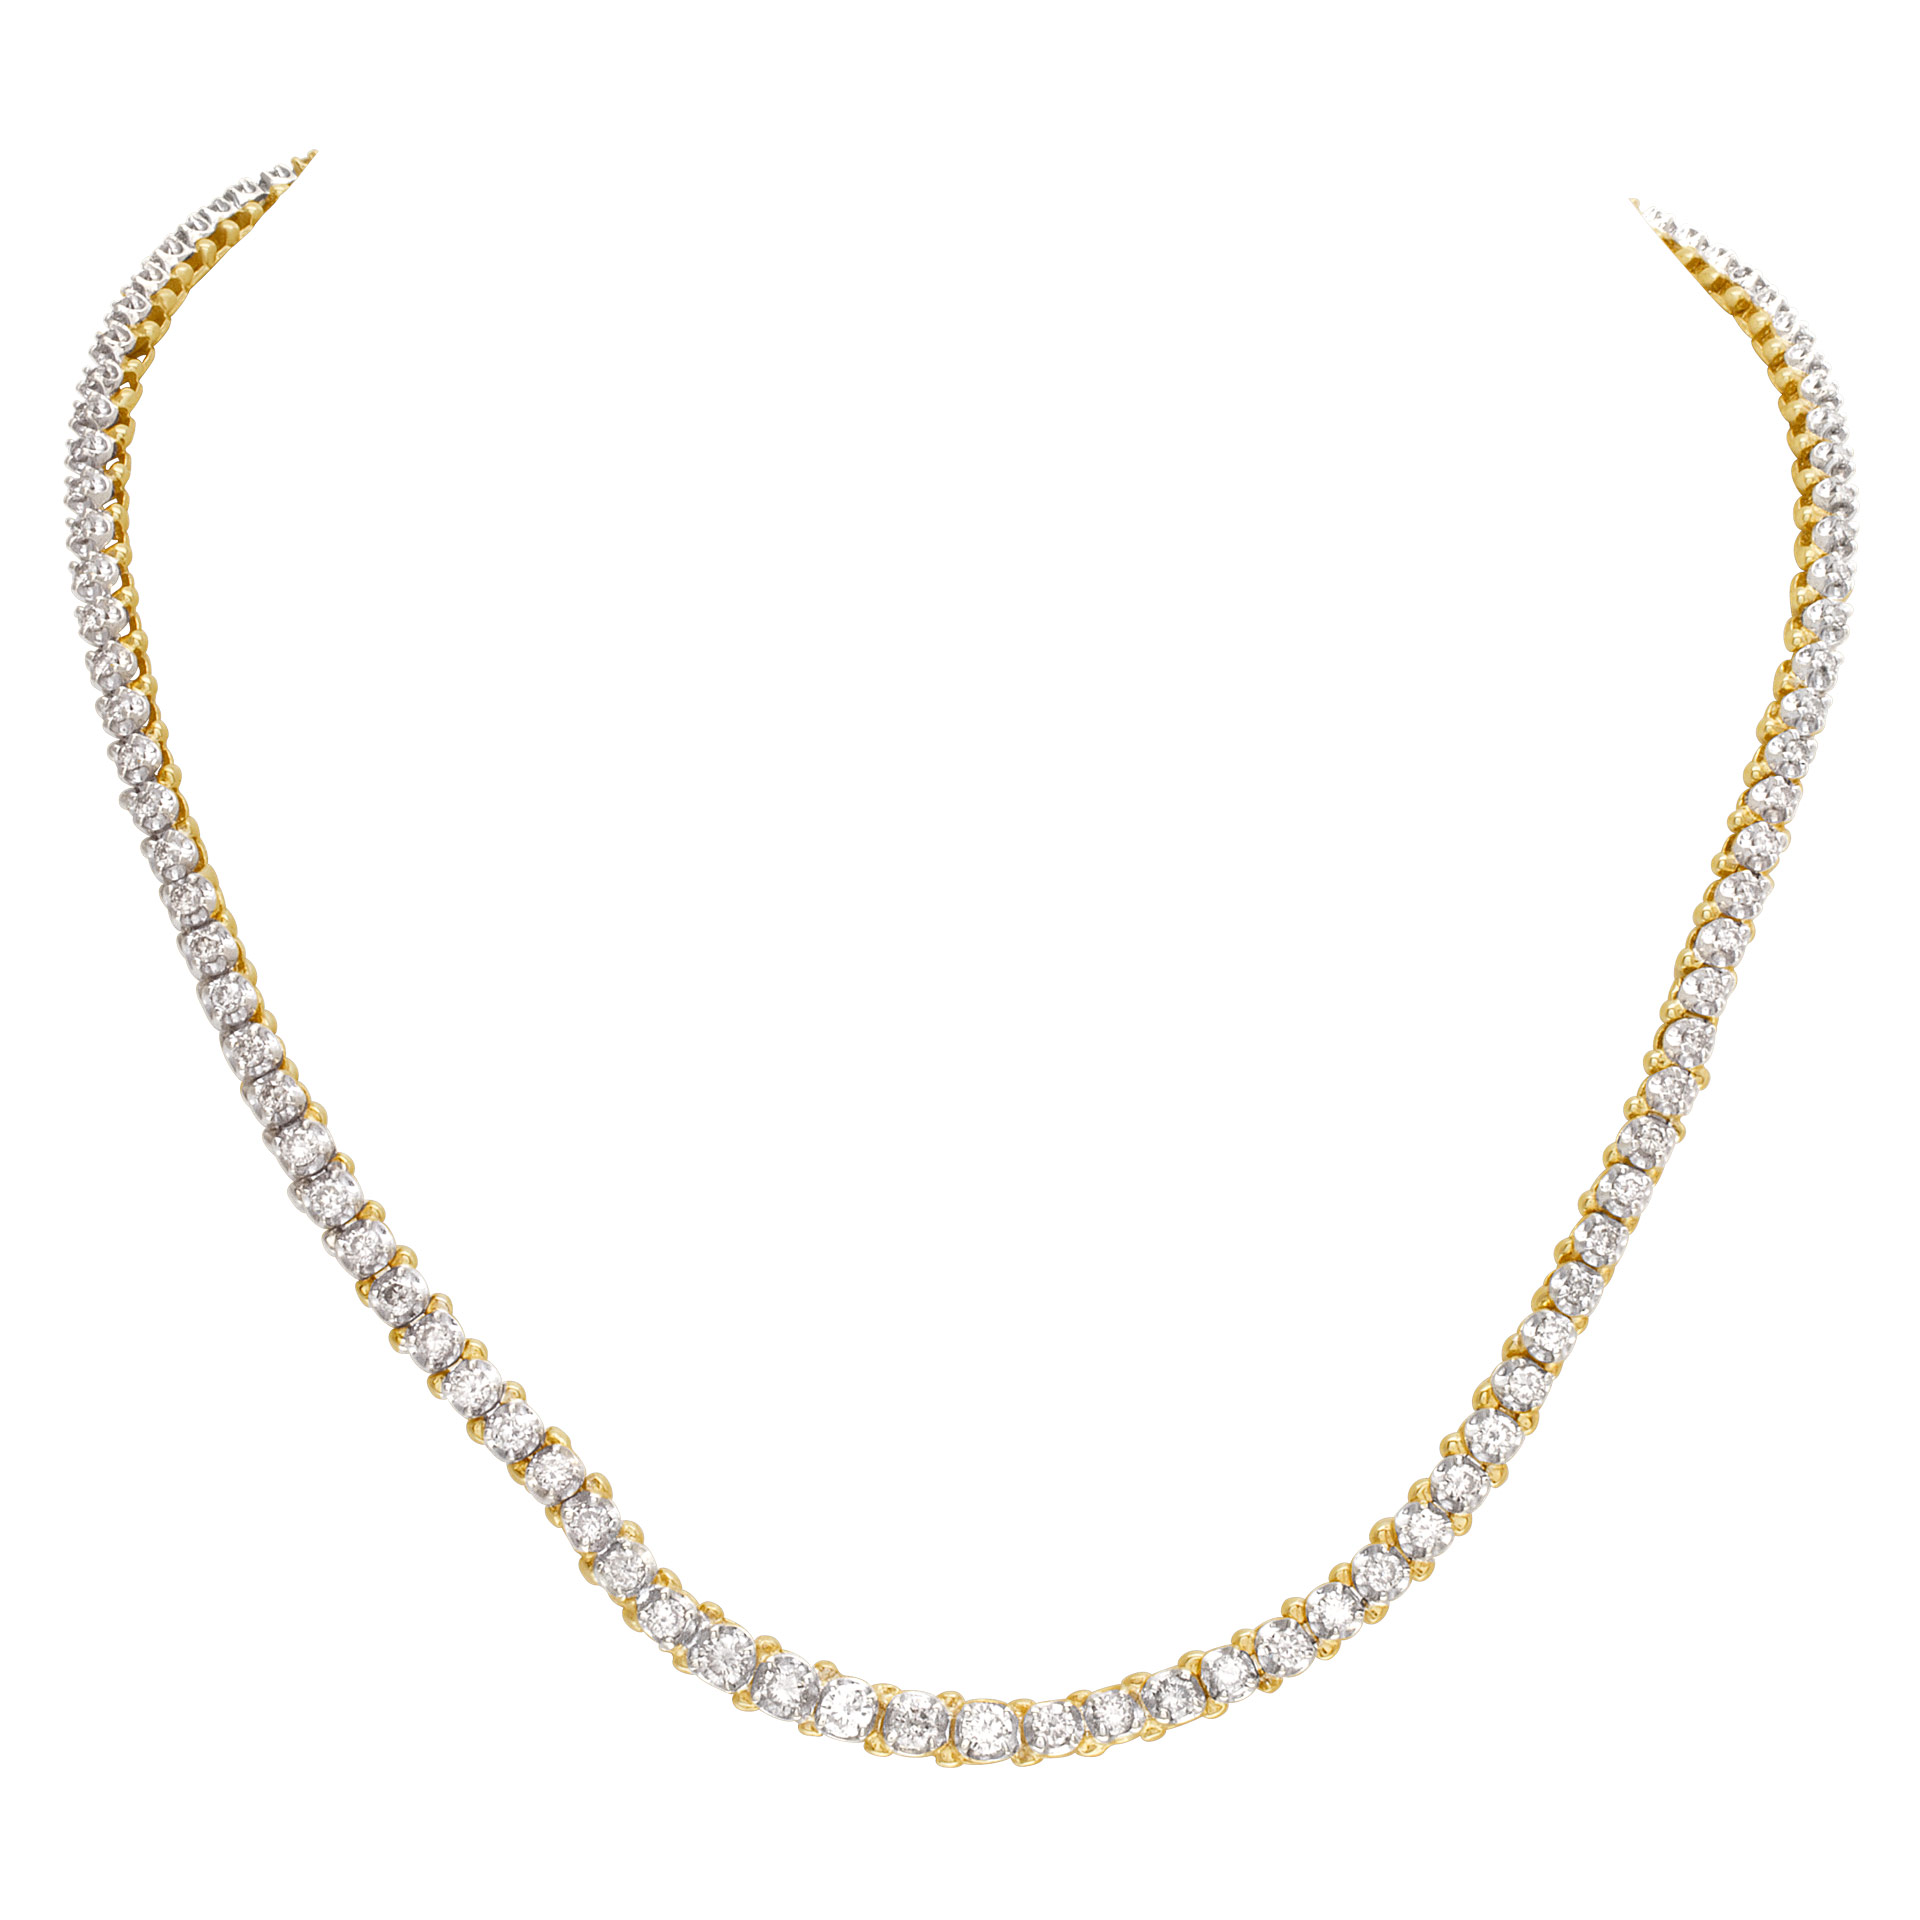 14k Yellow Gold Diamonds "Tennis" Necklace 16". 3.00 Carats in round diamonds